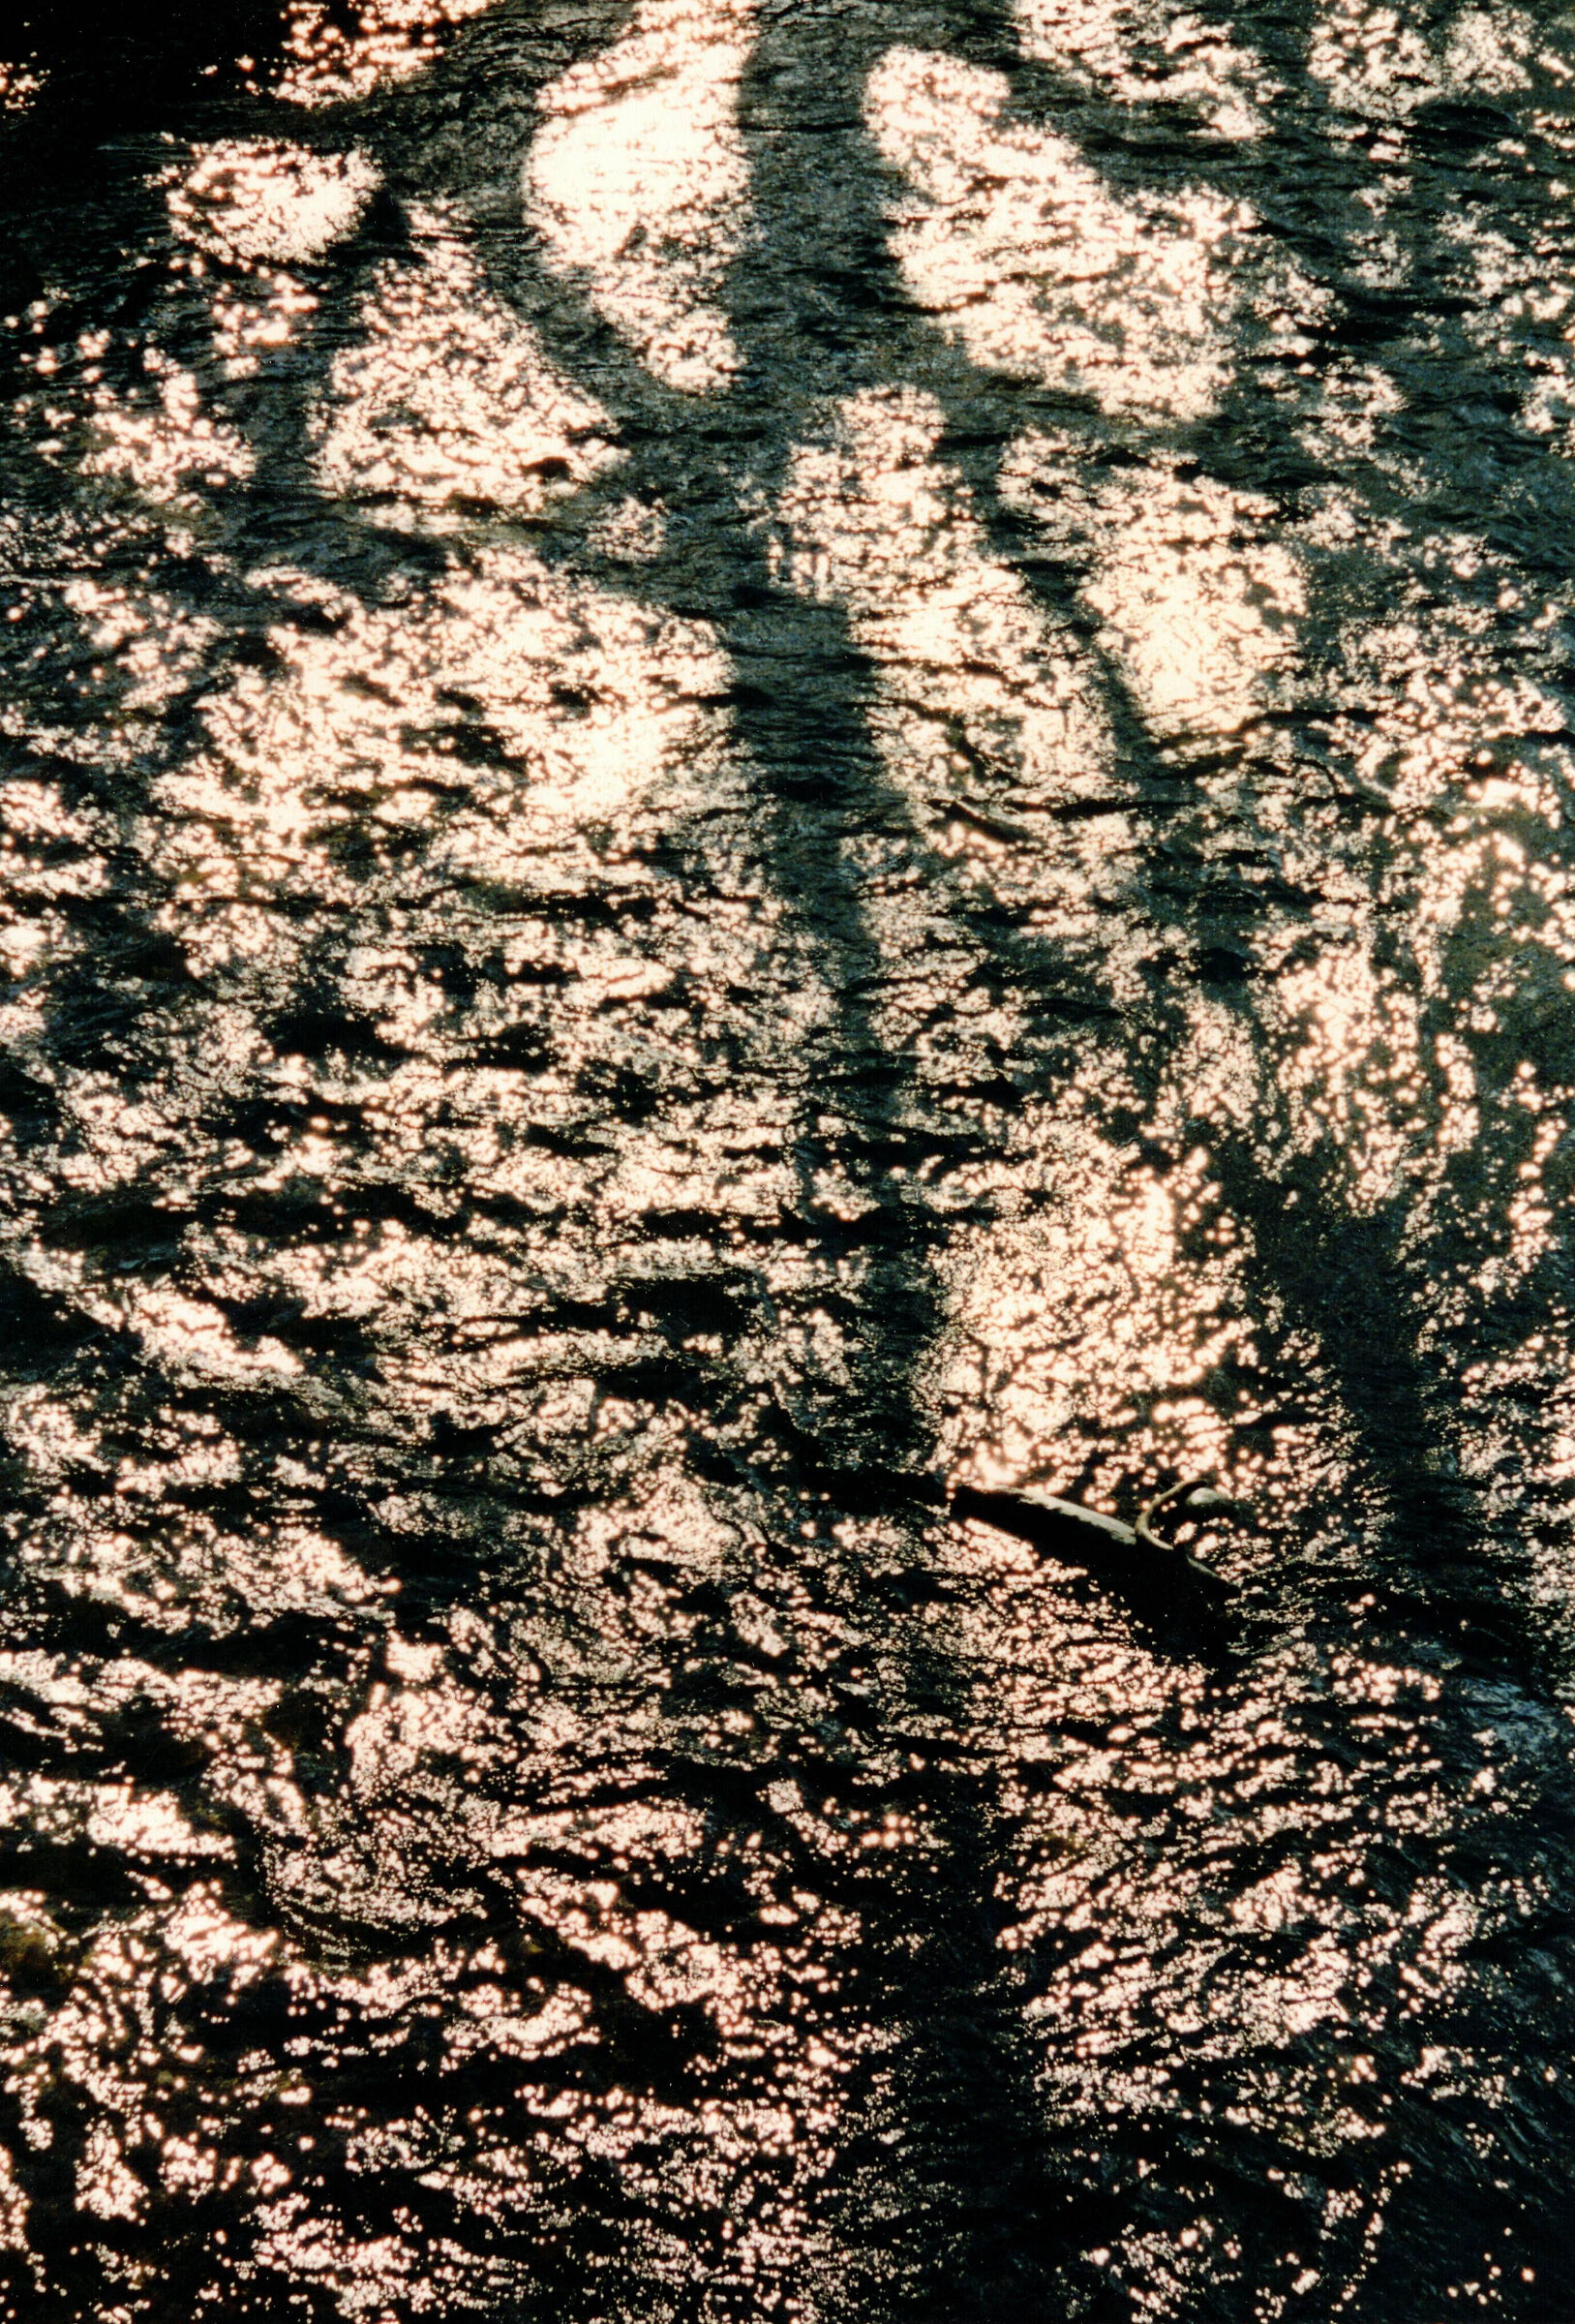 Shadows on the lake 1993...